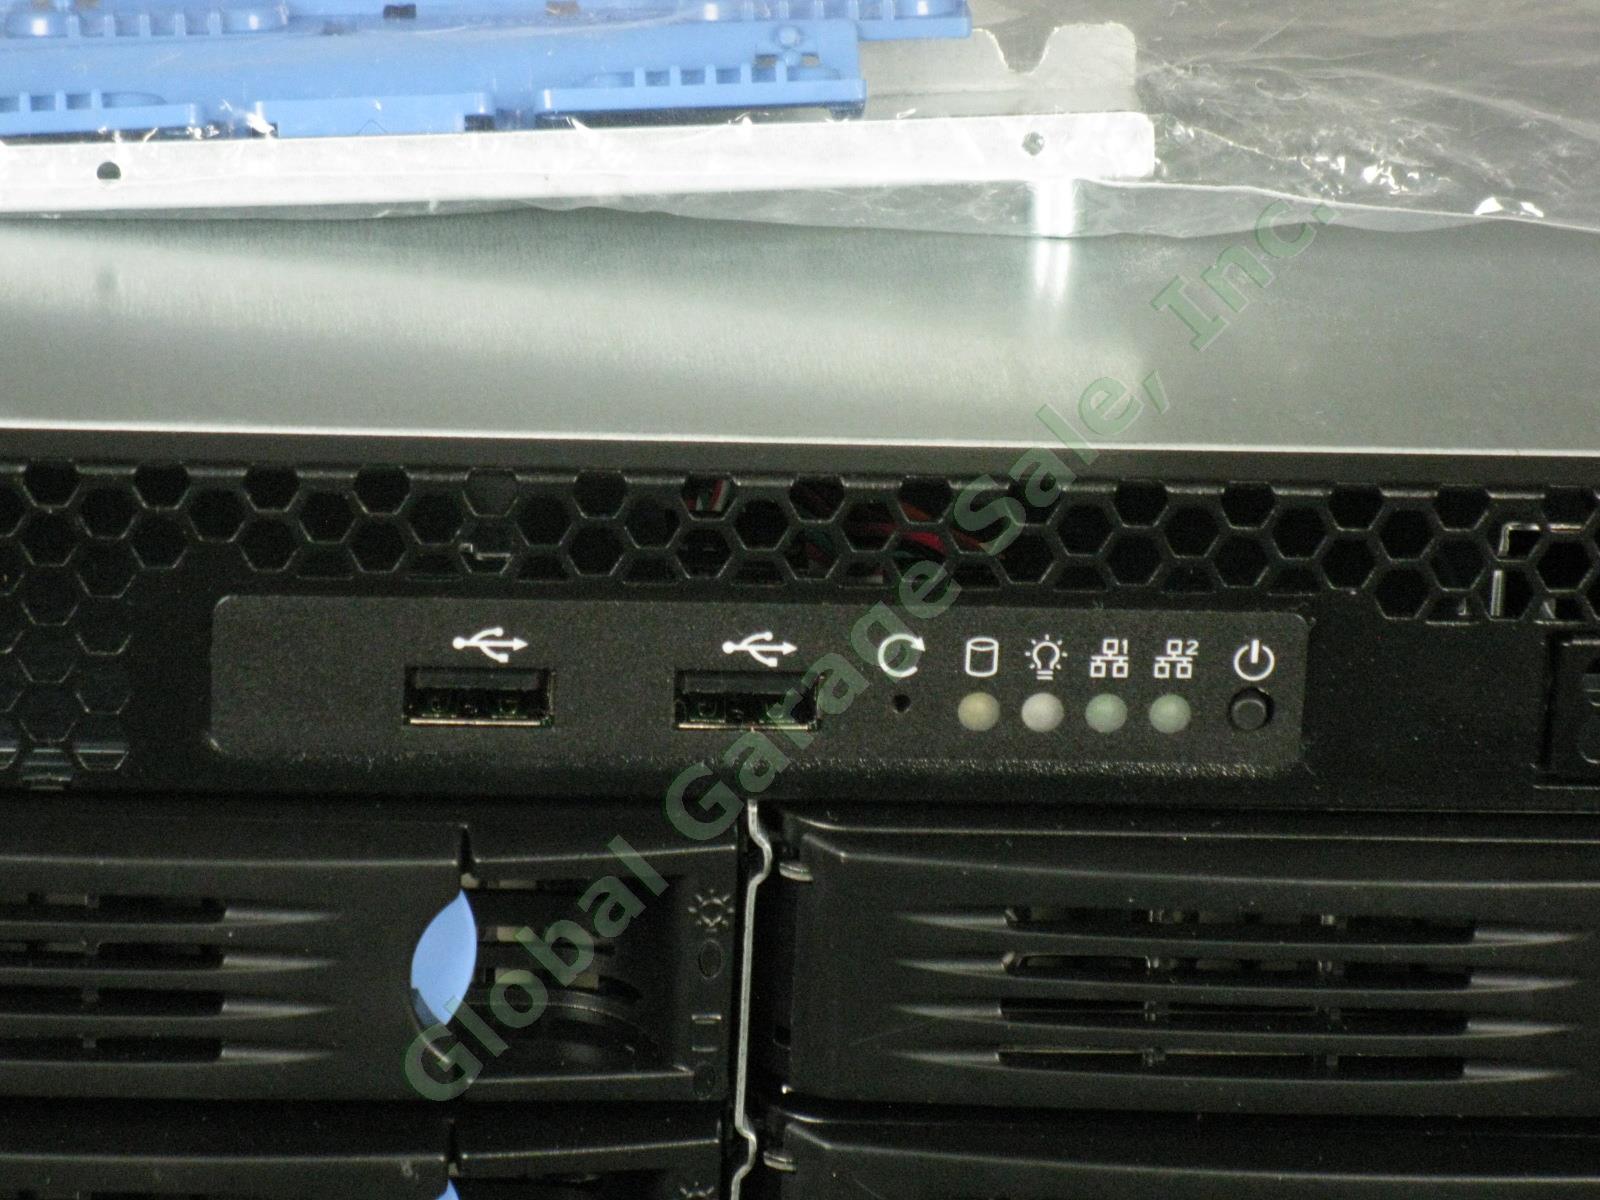 NEW Chenbro RM23608 2U 8-Bay Hot Swap Rack Mount Server Case Chassis SSI EEB 3